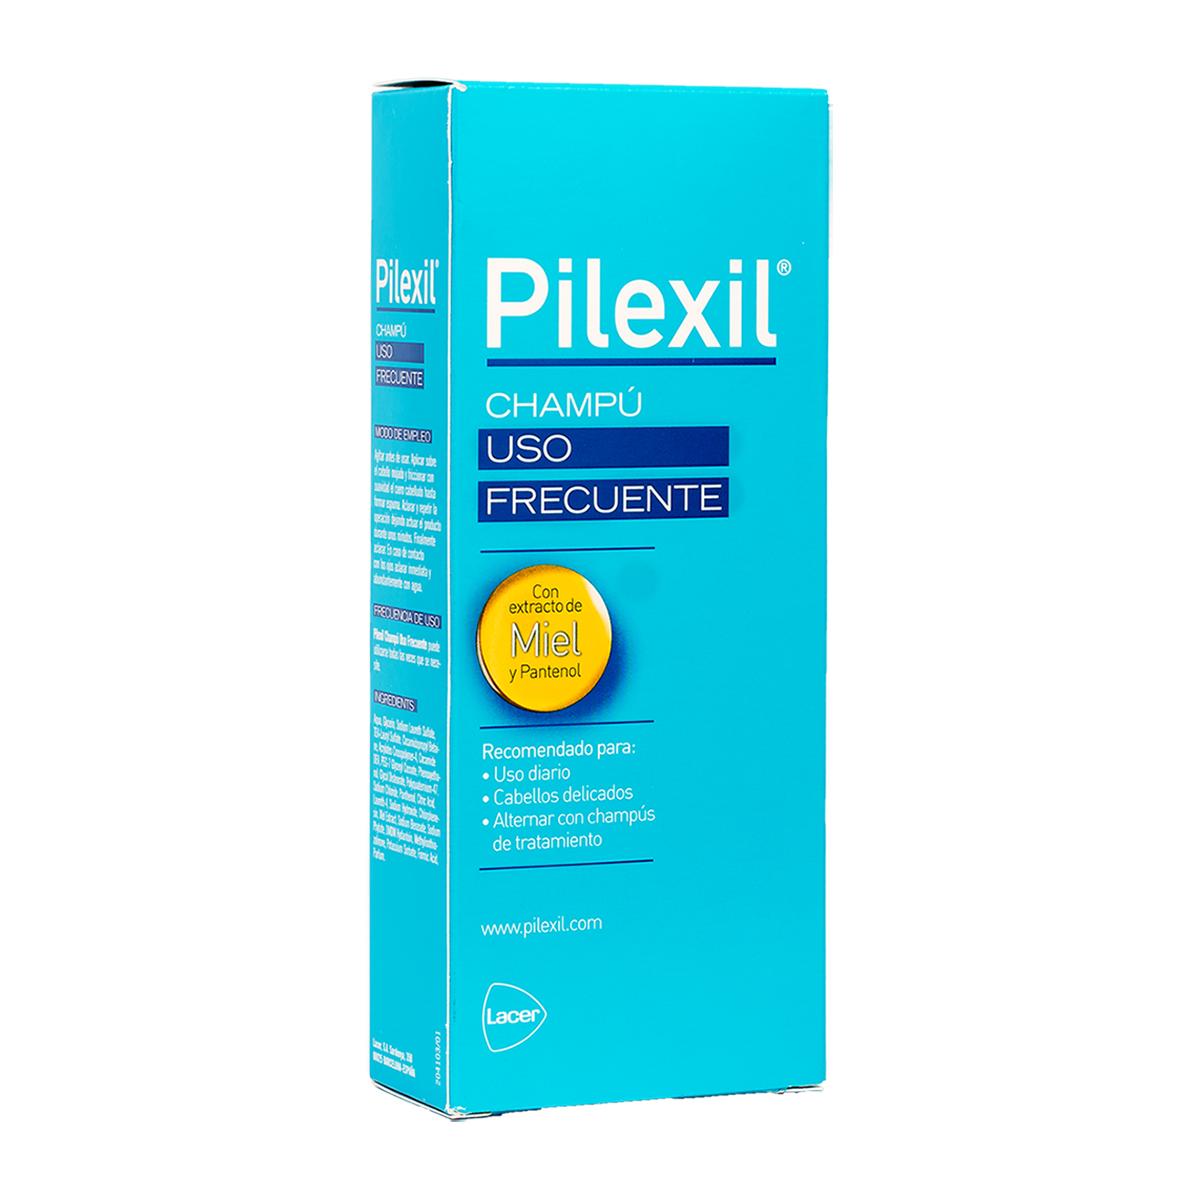 Pilexil - Pilexil champu uso frecuente 300ml